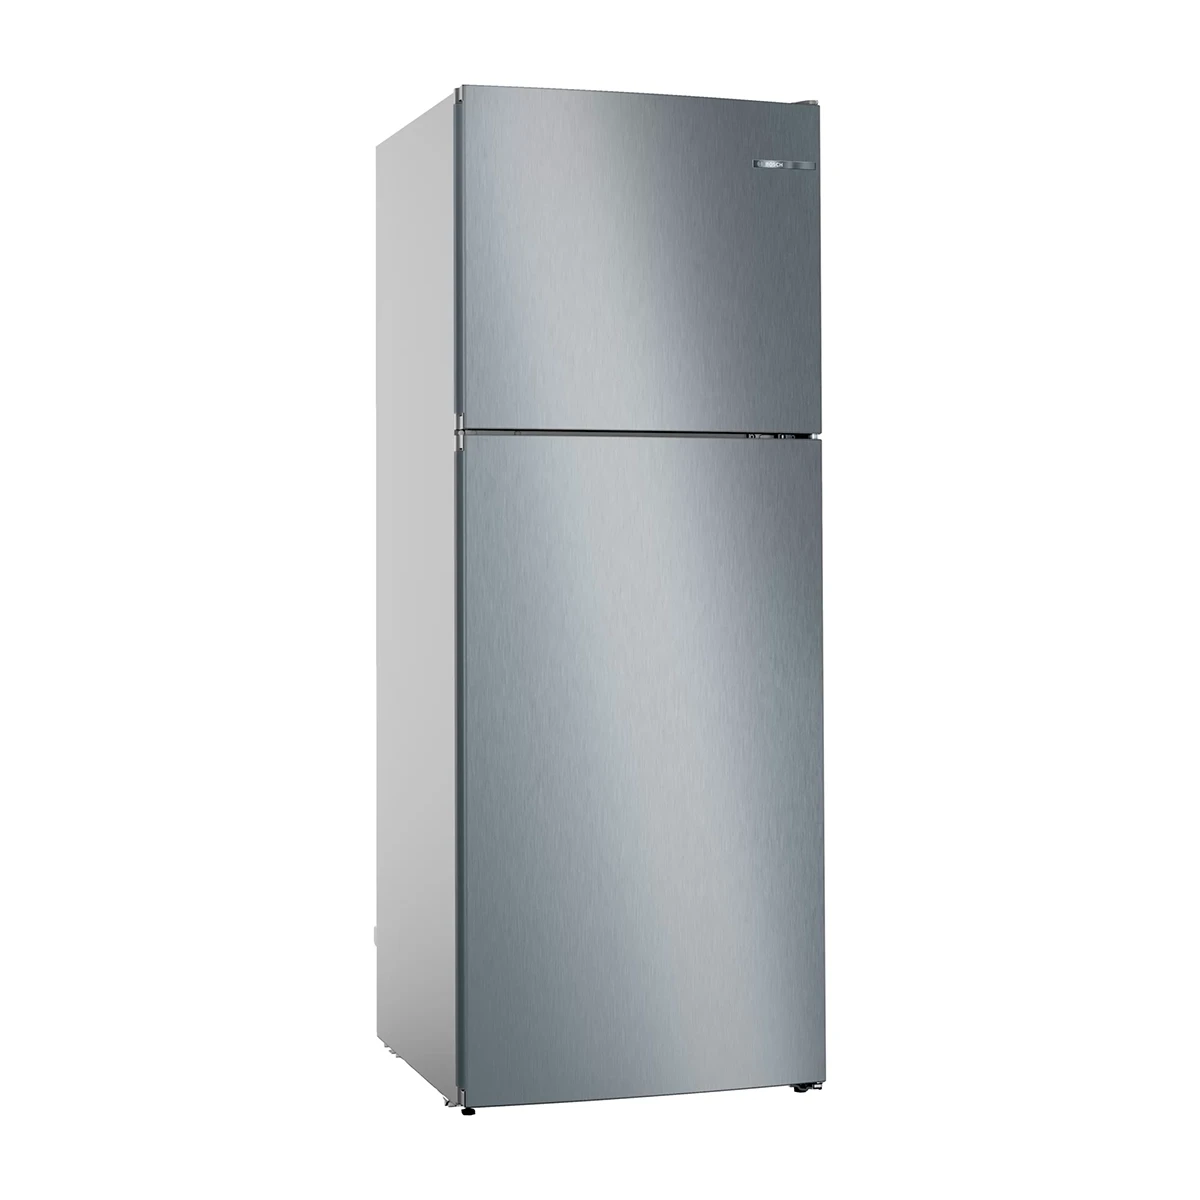 BOSCH Series 4 standing fridge-freezer with freezer at top 186 x 70 cm Stainless steel look